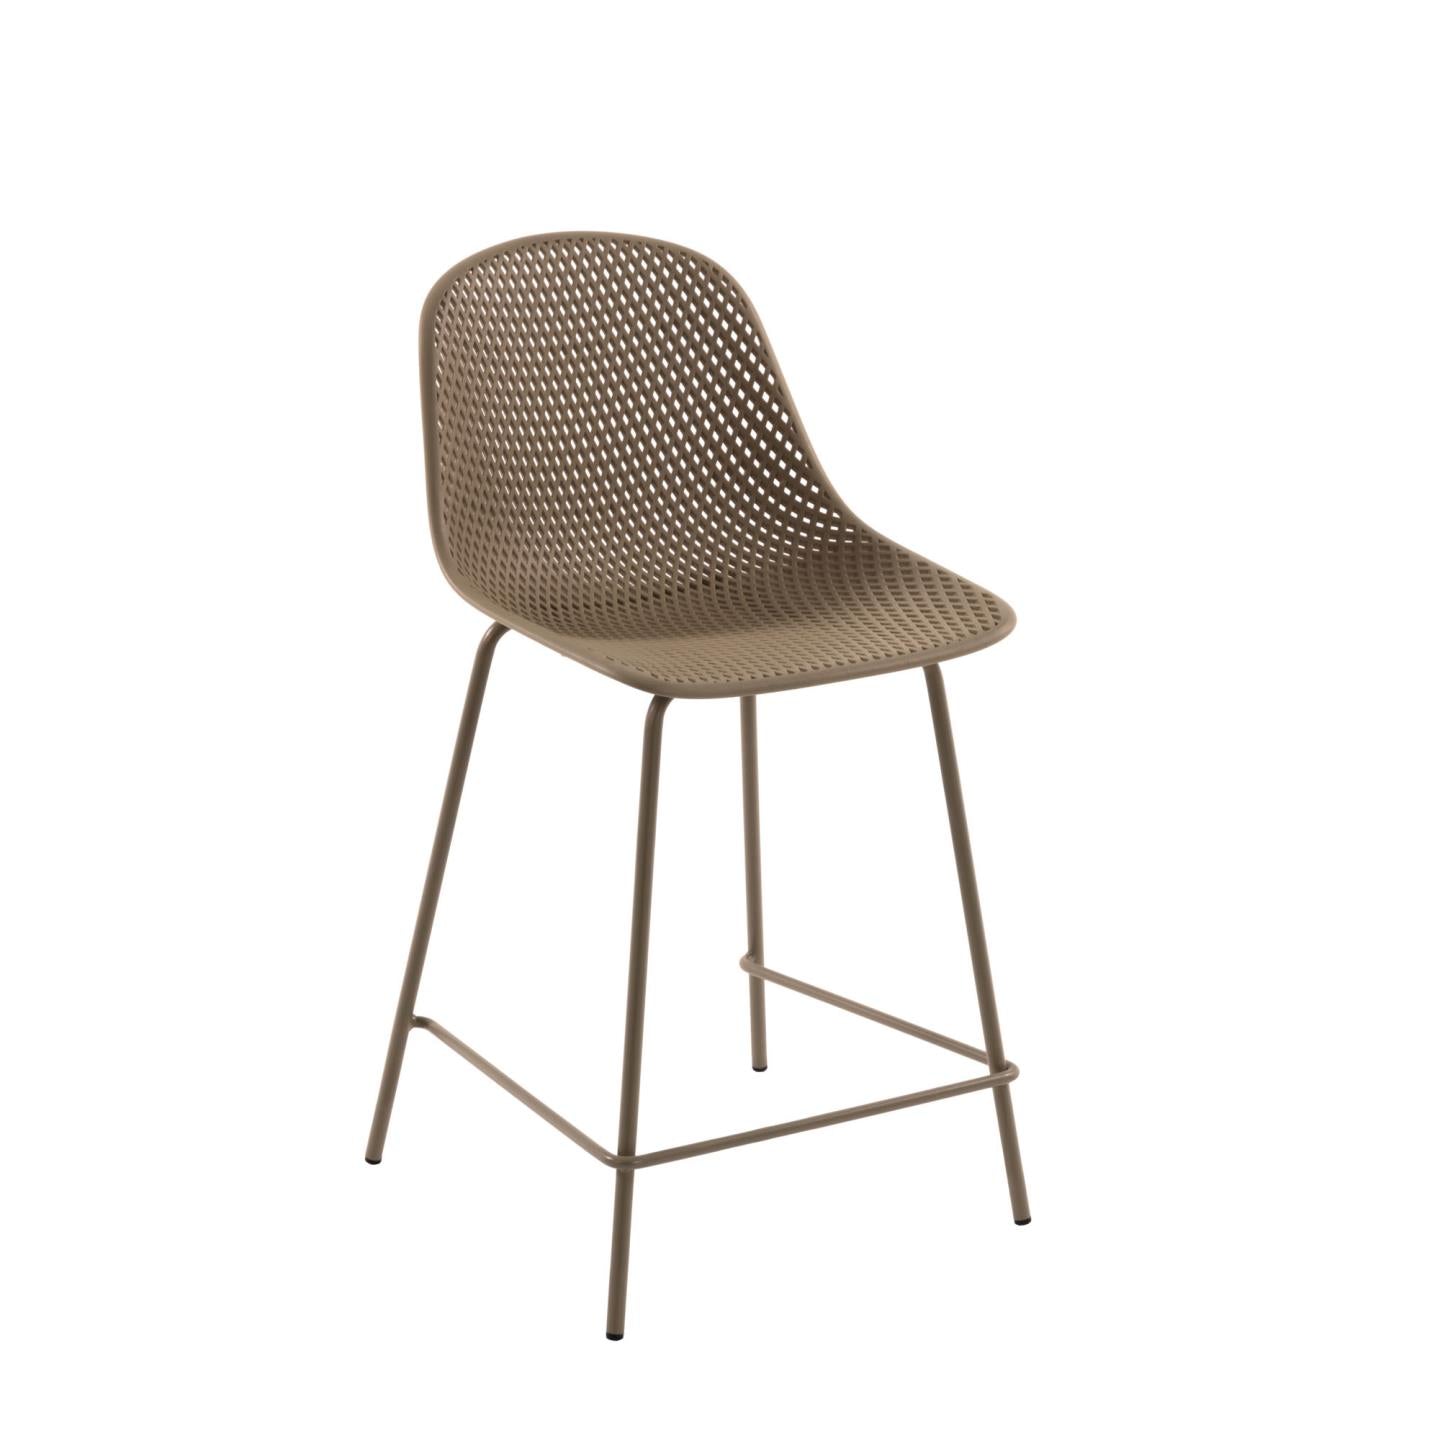 Quinby outdoor stool in beige, height 65 cm